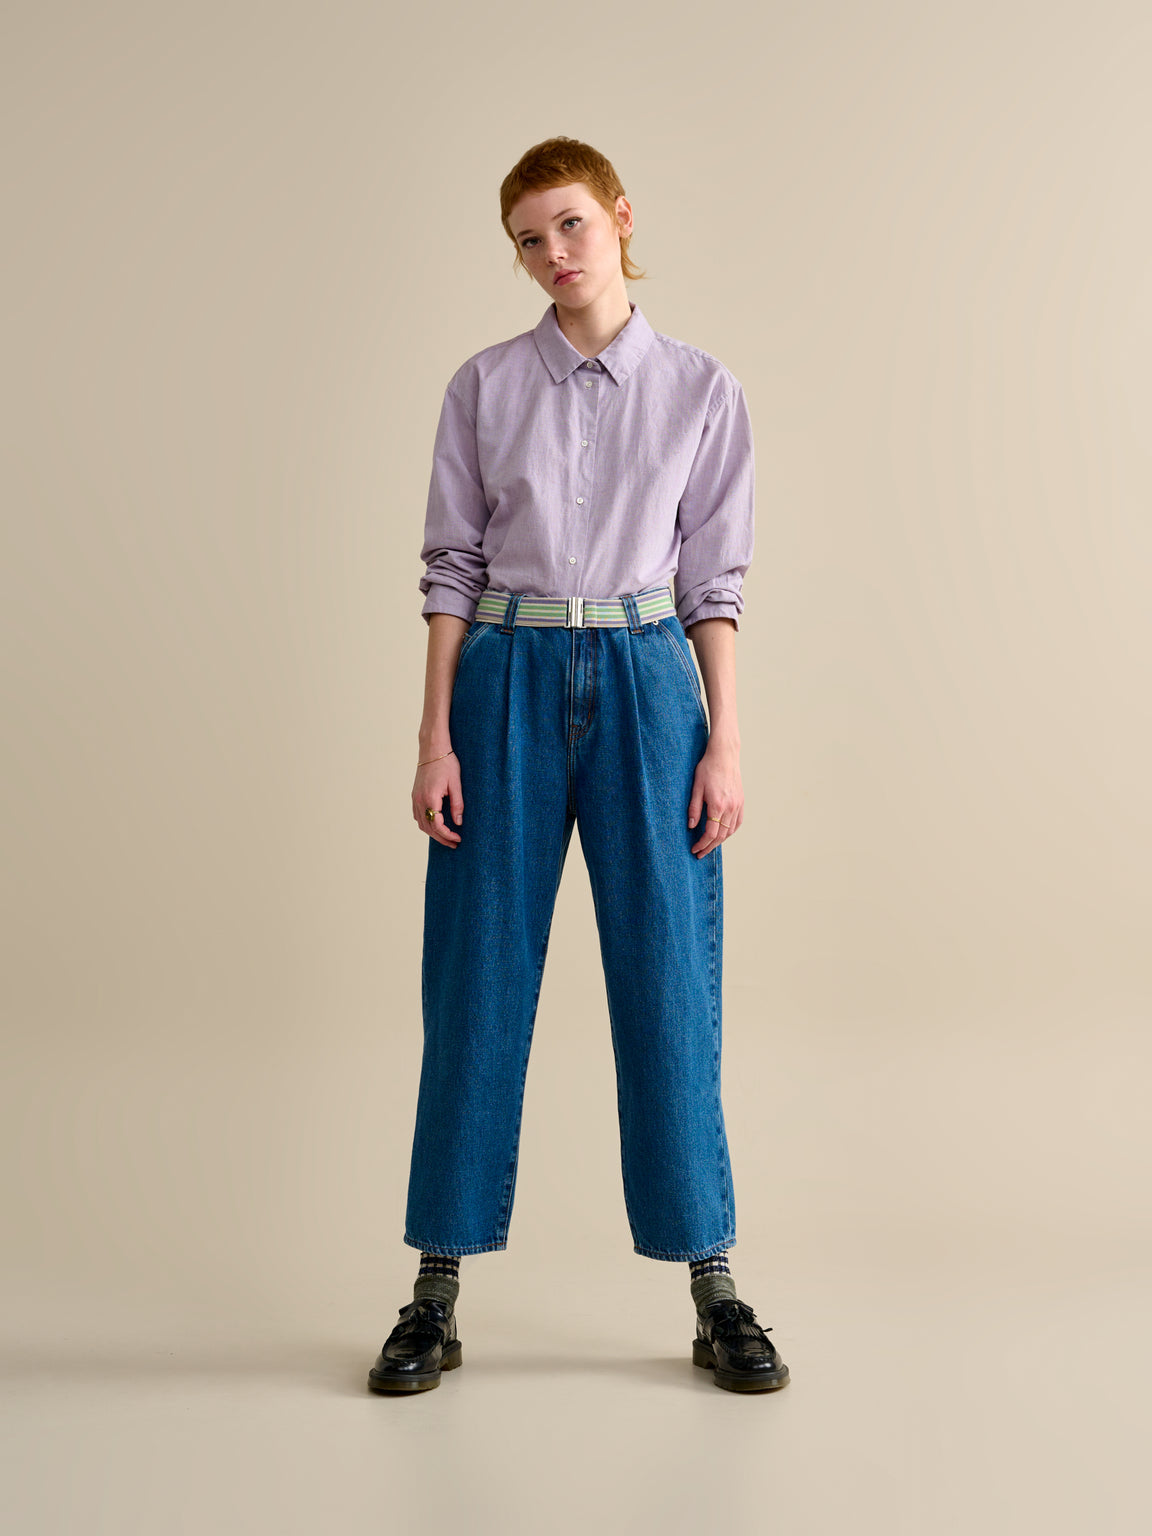 Pram Jeans - Blue | Women Collection | Bellerose